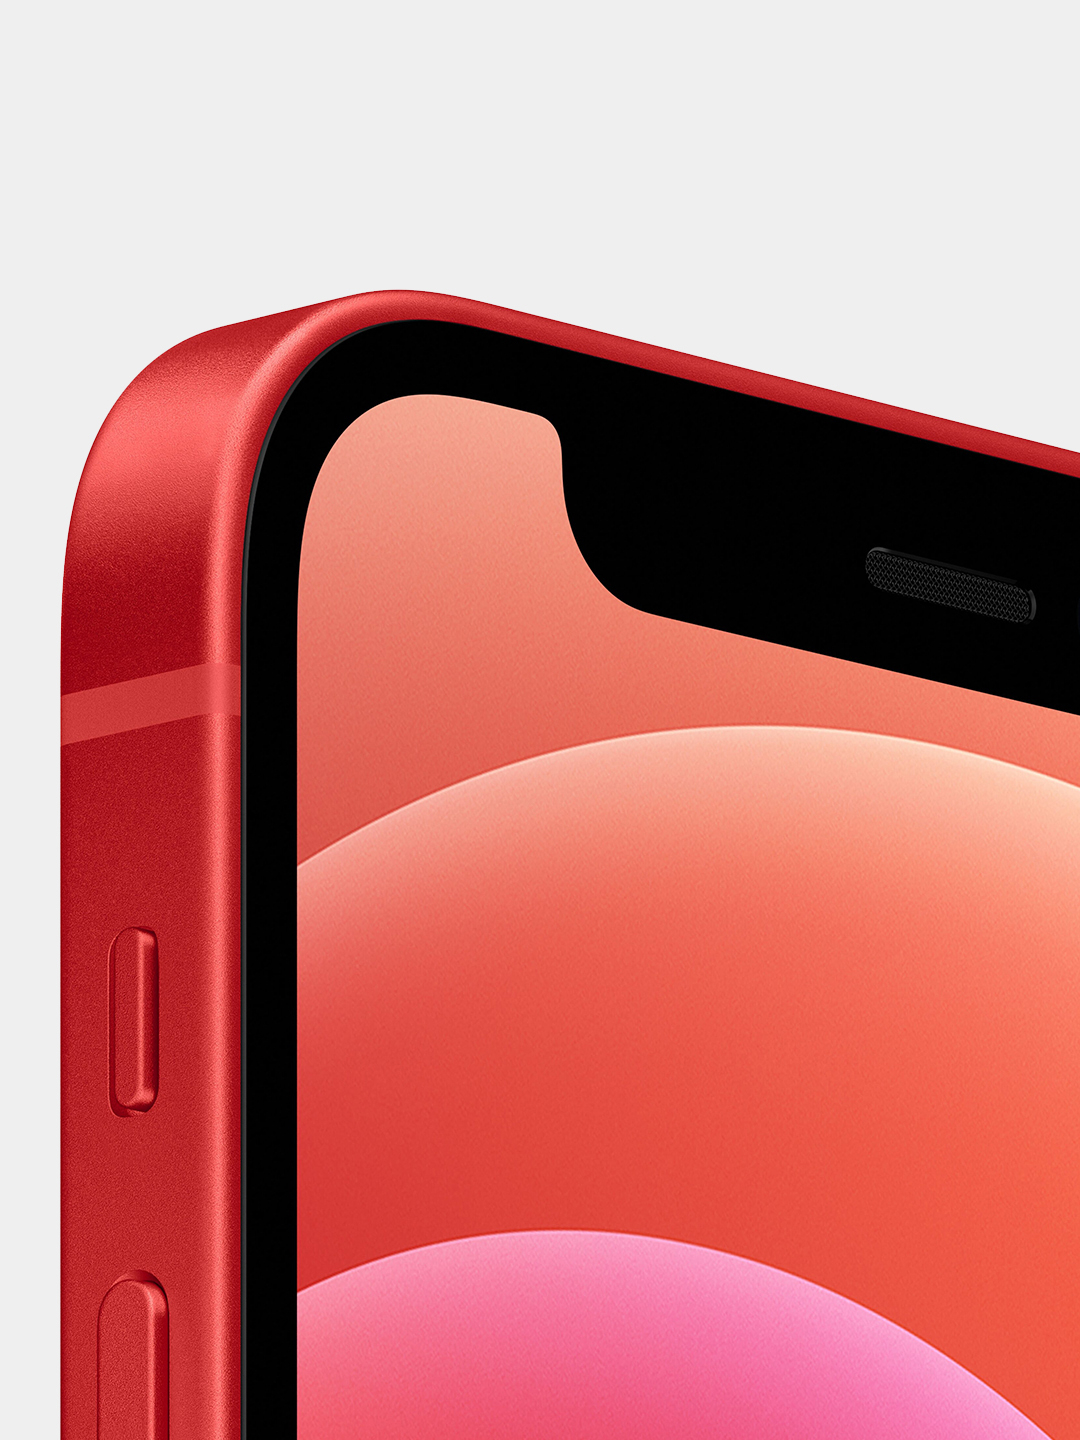 Смартфон Apple iPhone 12 mini, 256 ГБ, (PRODUCT)RED (РСТ) купить по цене  70527 ₽ в интернет-магазине KazanExpress